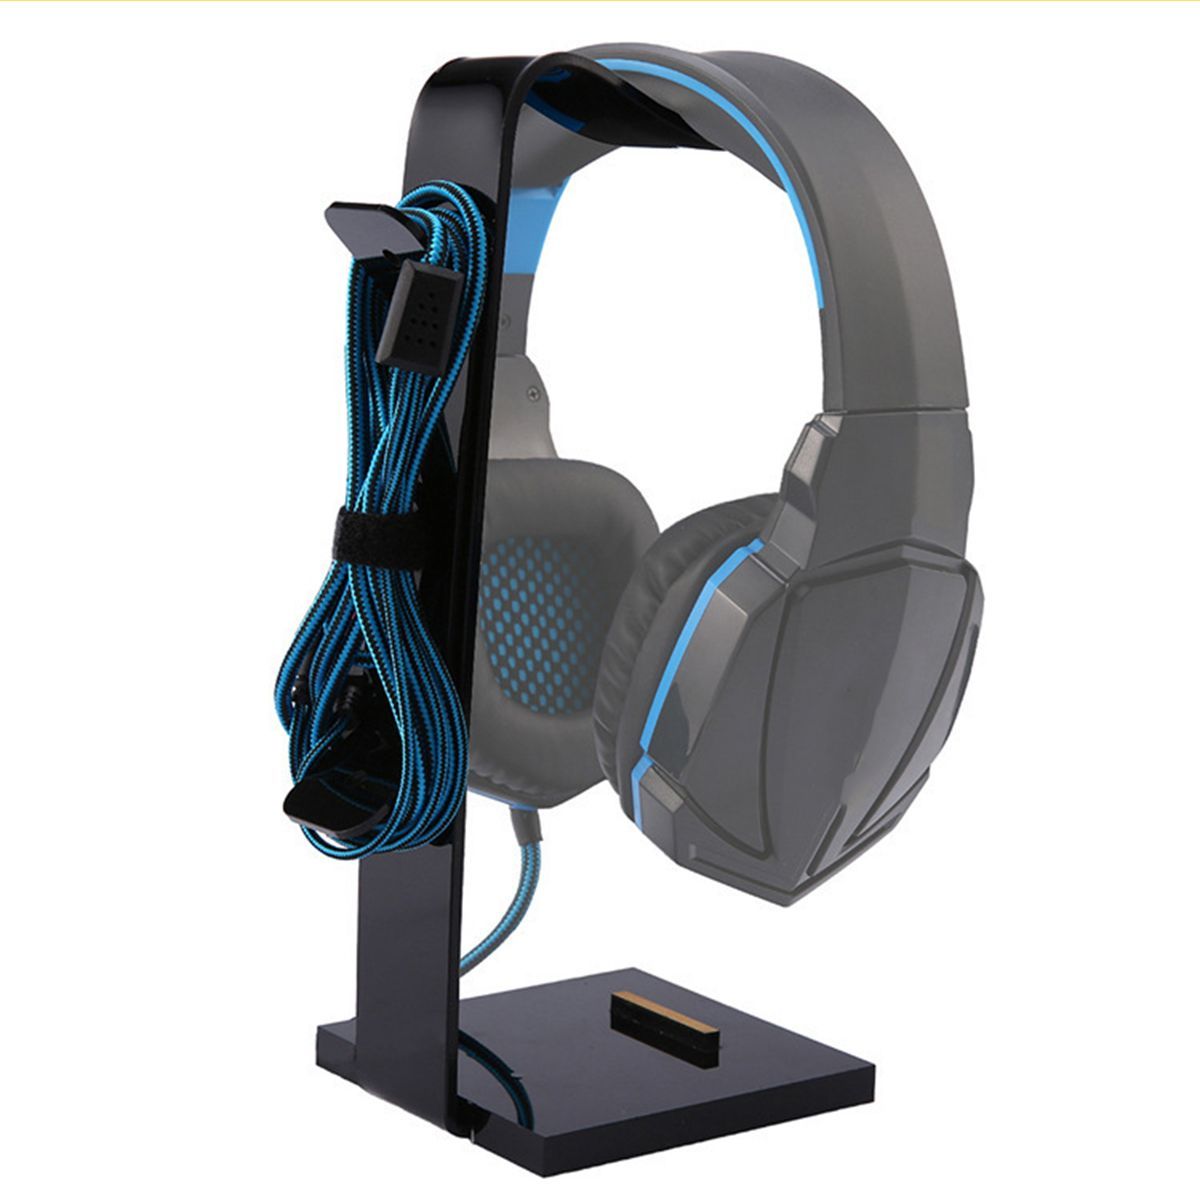 Universal-Acrylic-Headset-Headphone-Gaming-Earphone-Holder-Hanger-Display-Stand-1749847